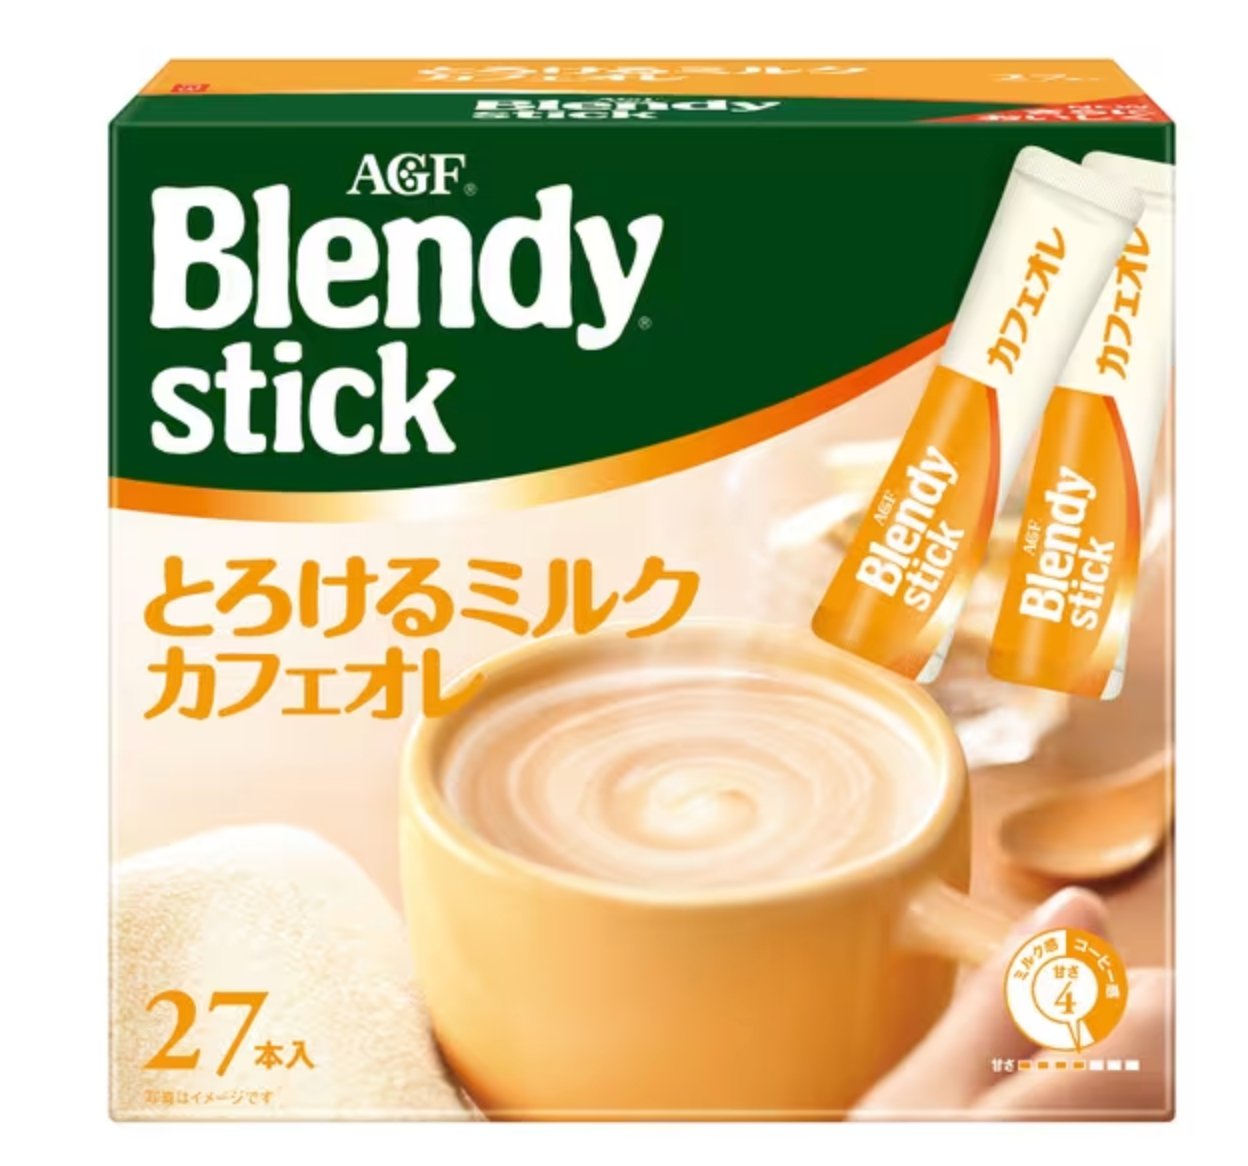 Ajinomoto Agf Blendy Stick Melted Milk Cafe Au Lait Instant Coffee 27 Sticks - Melted Milk Coffee